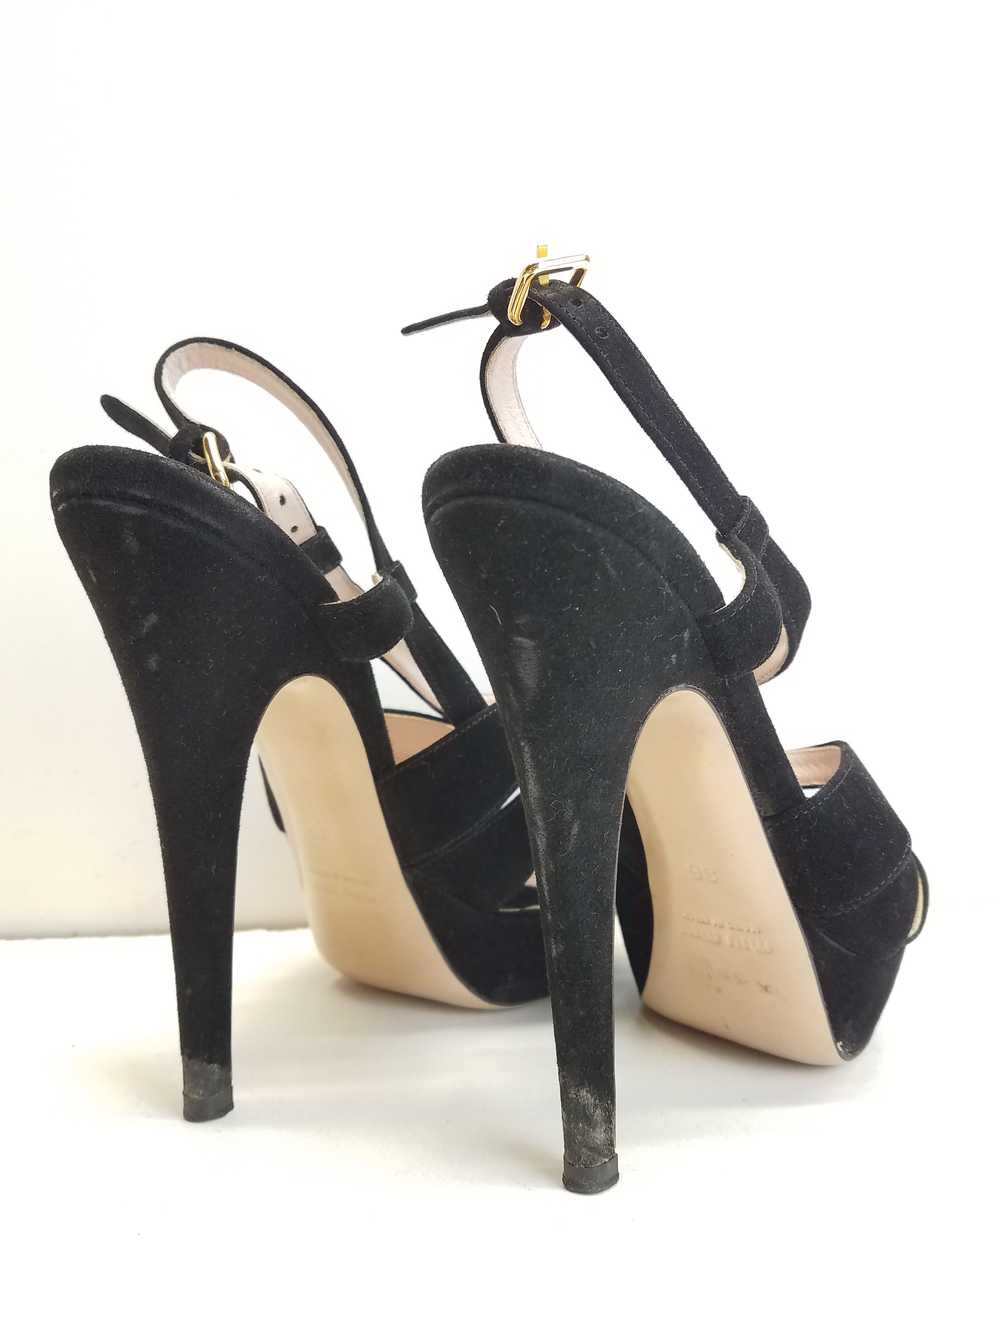 Miu Miu Women's Black Heels Size 5.5 w/ COA - image 4